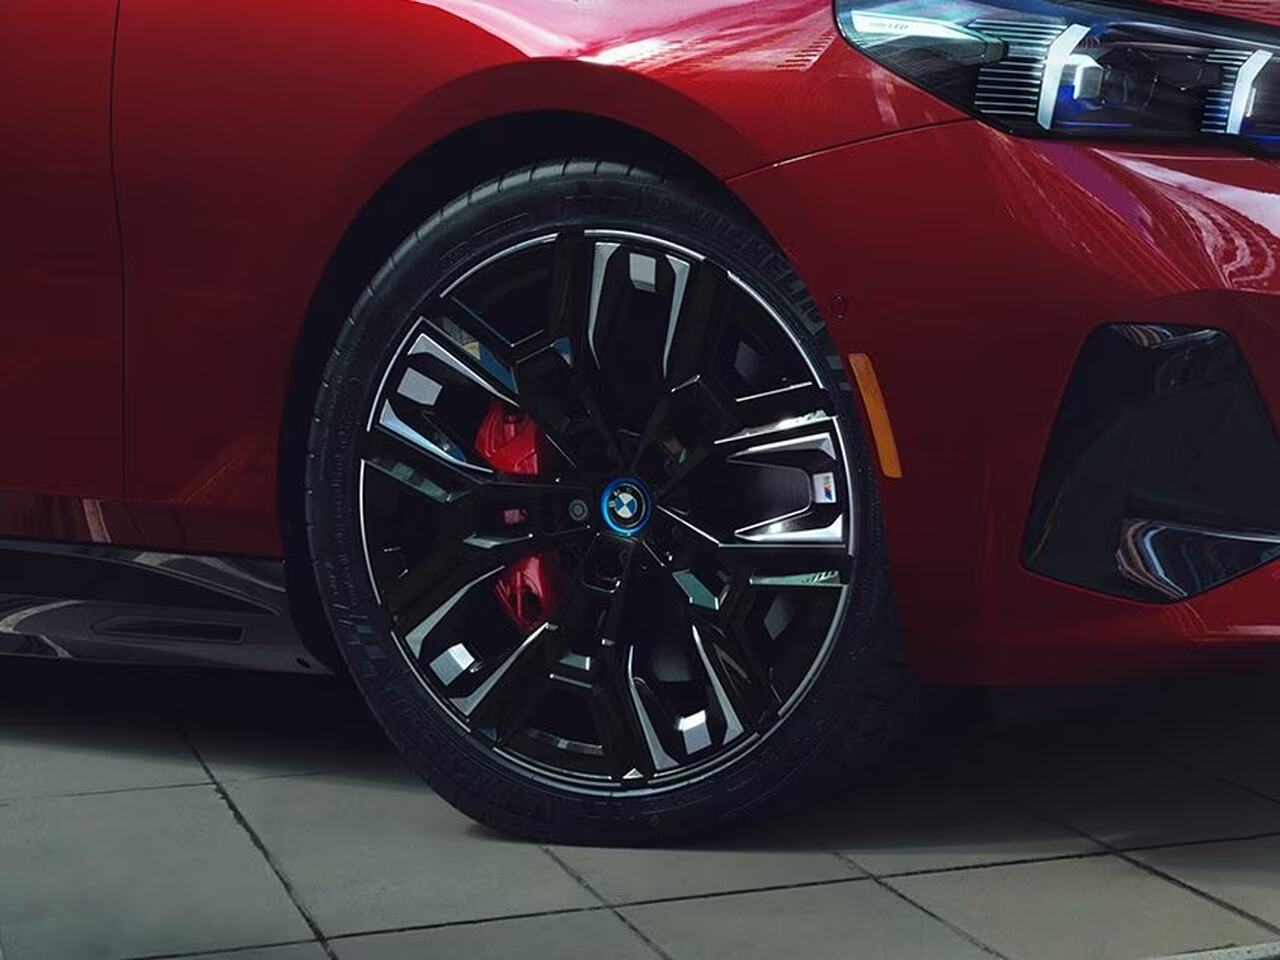 Foto da roda do carro da BMW